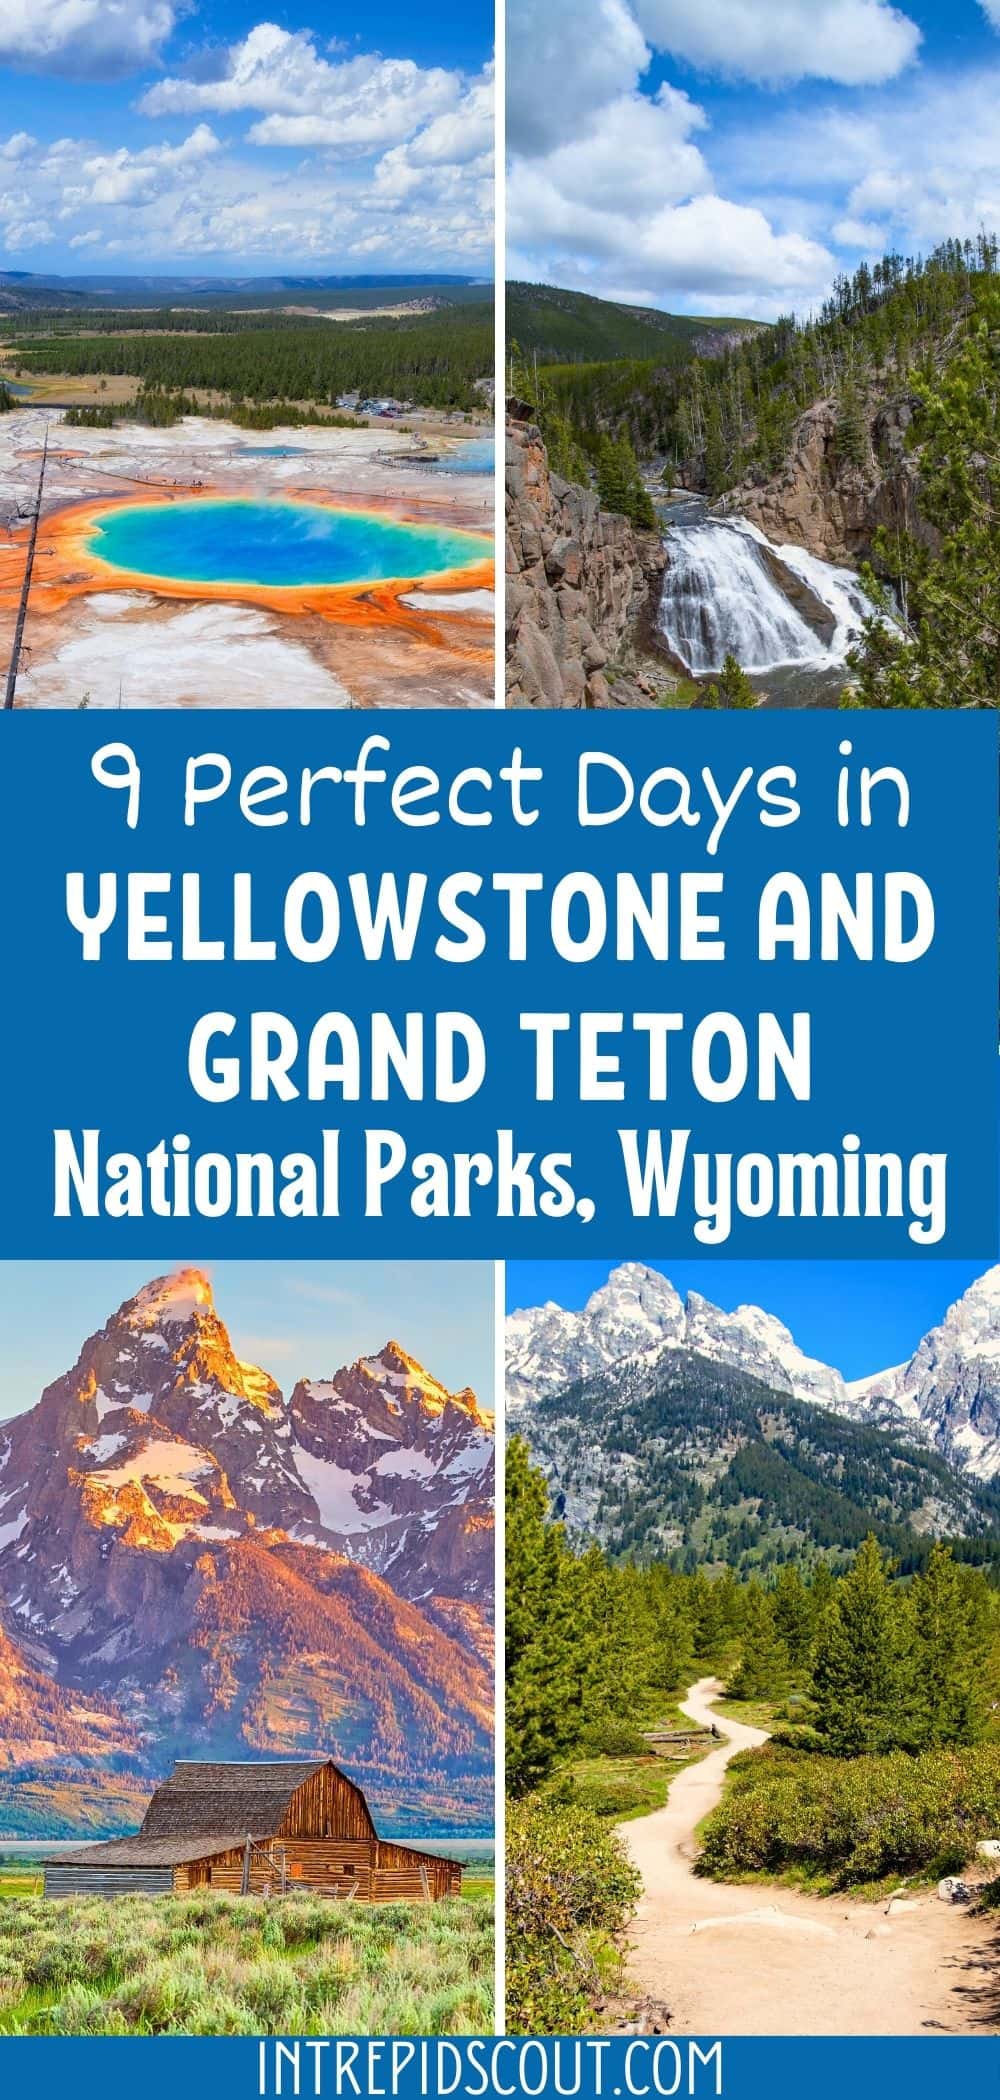 9 Days in Yellowstone and Grand Teton